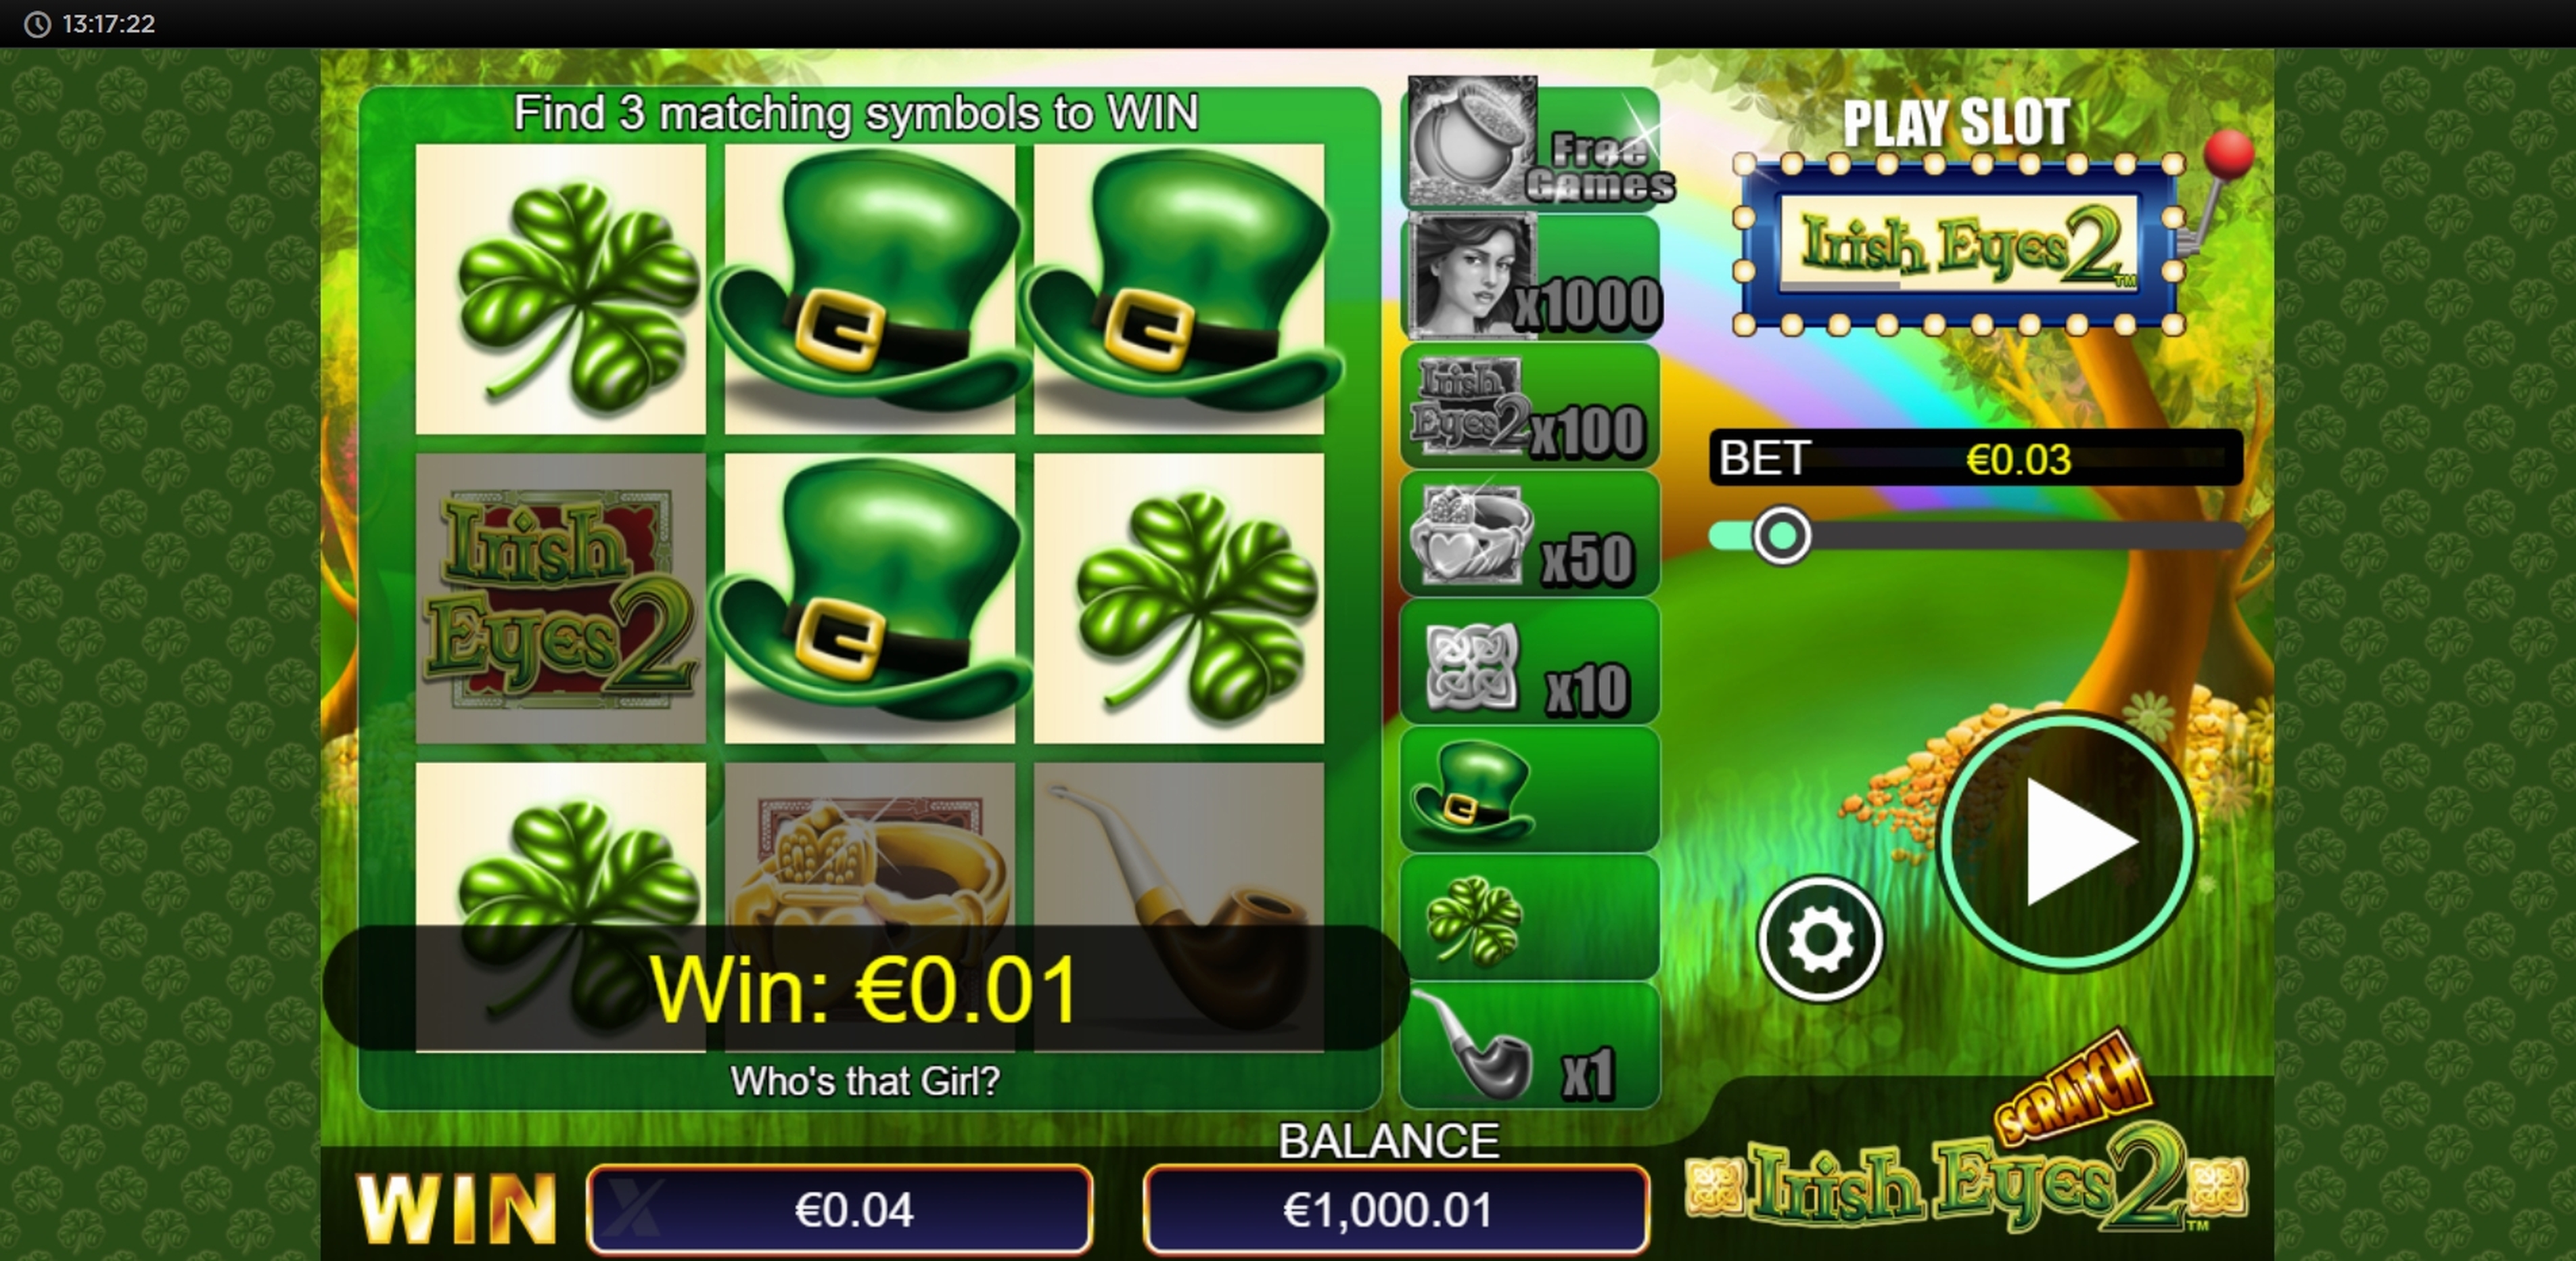 Win Money in Scratch Irish Eyes 2 Free Slot Game by NextGen Gaming